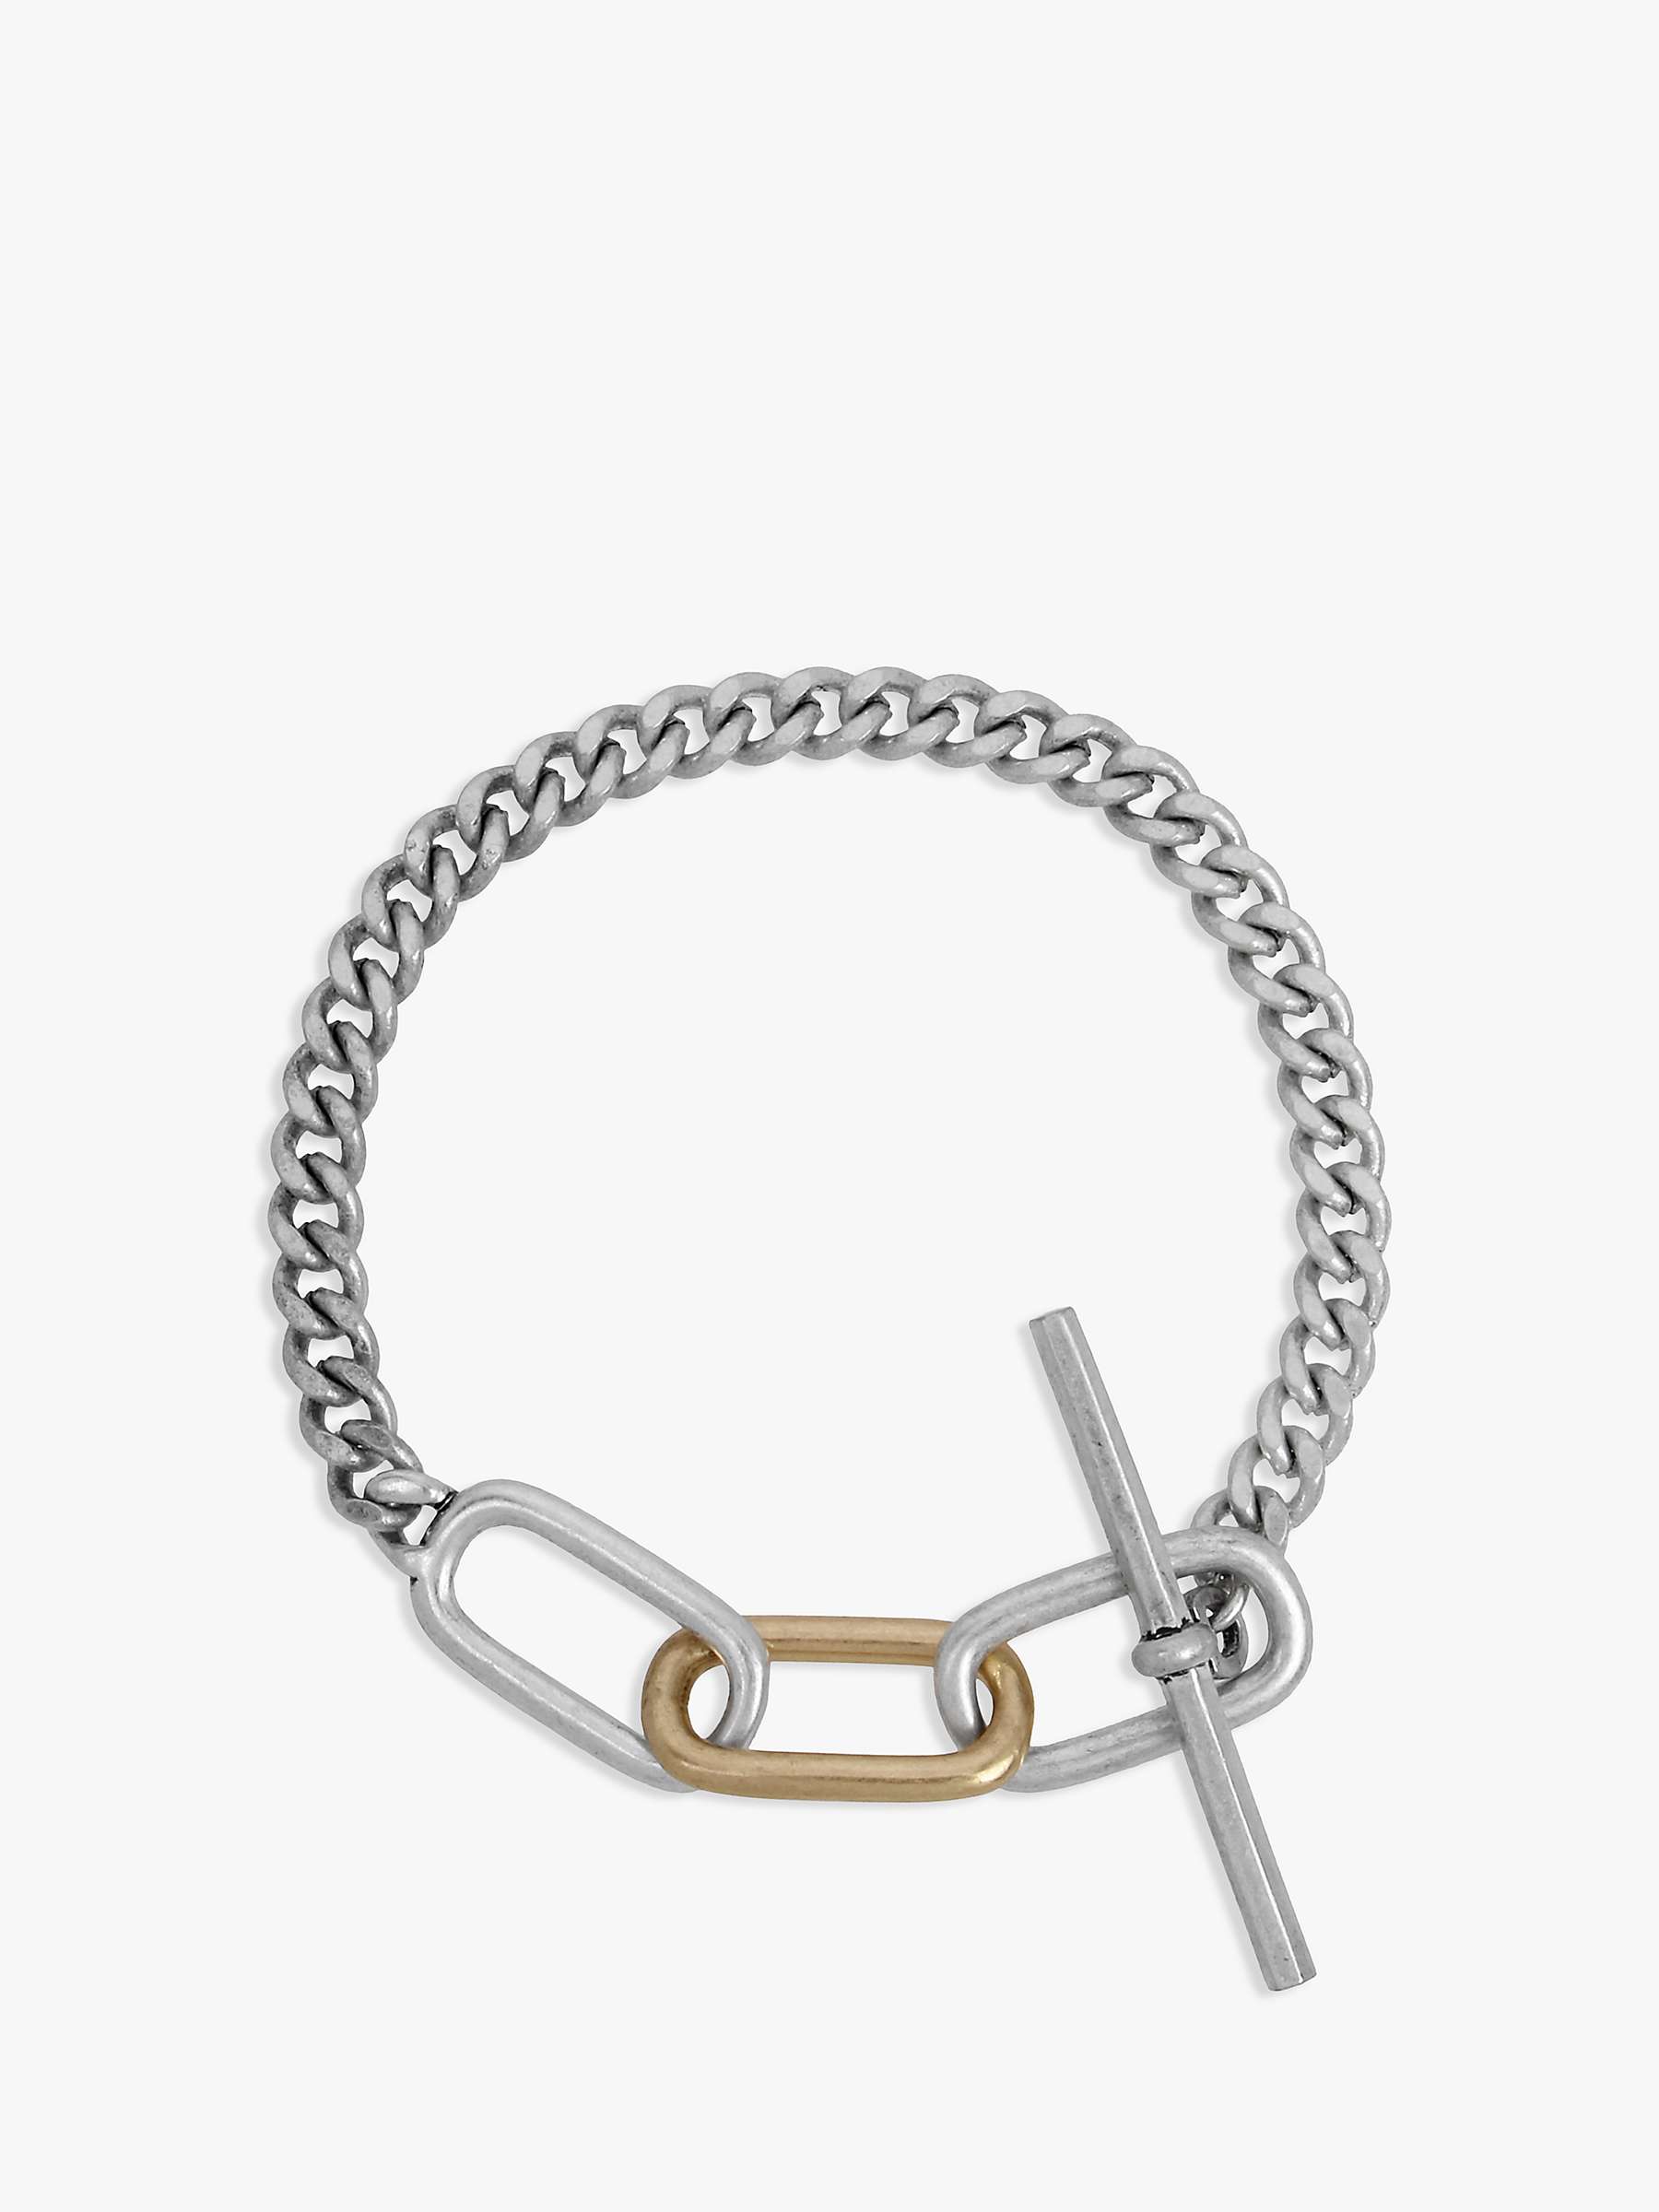 Buy AllSaints Mixed Link Chain Bracelet, Silver/Gold Online at johnlewis.com